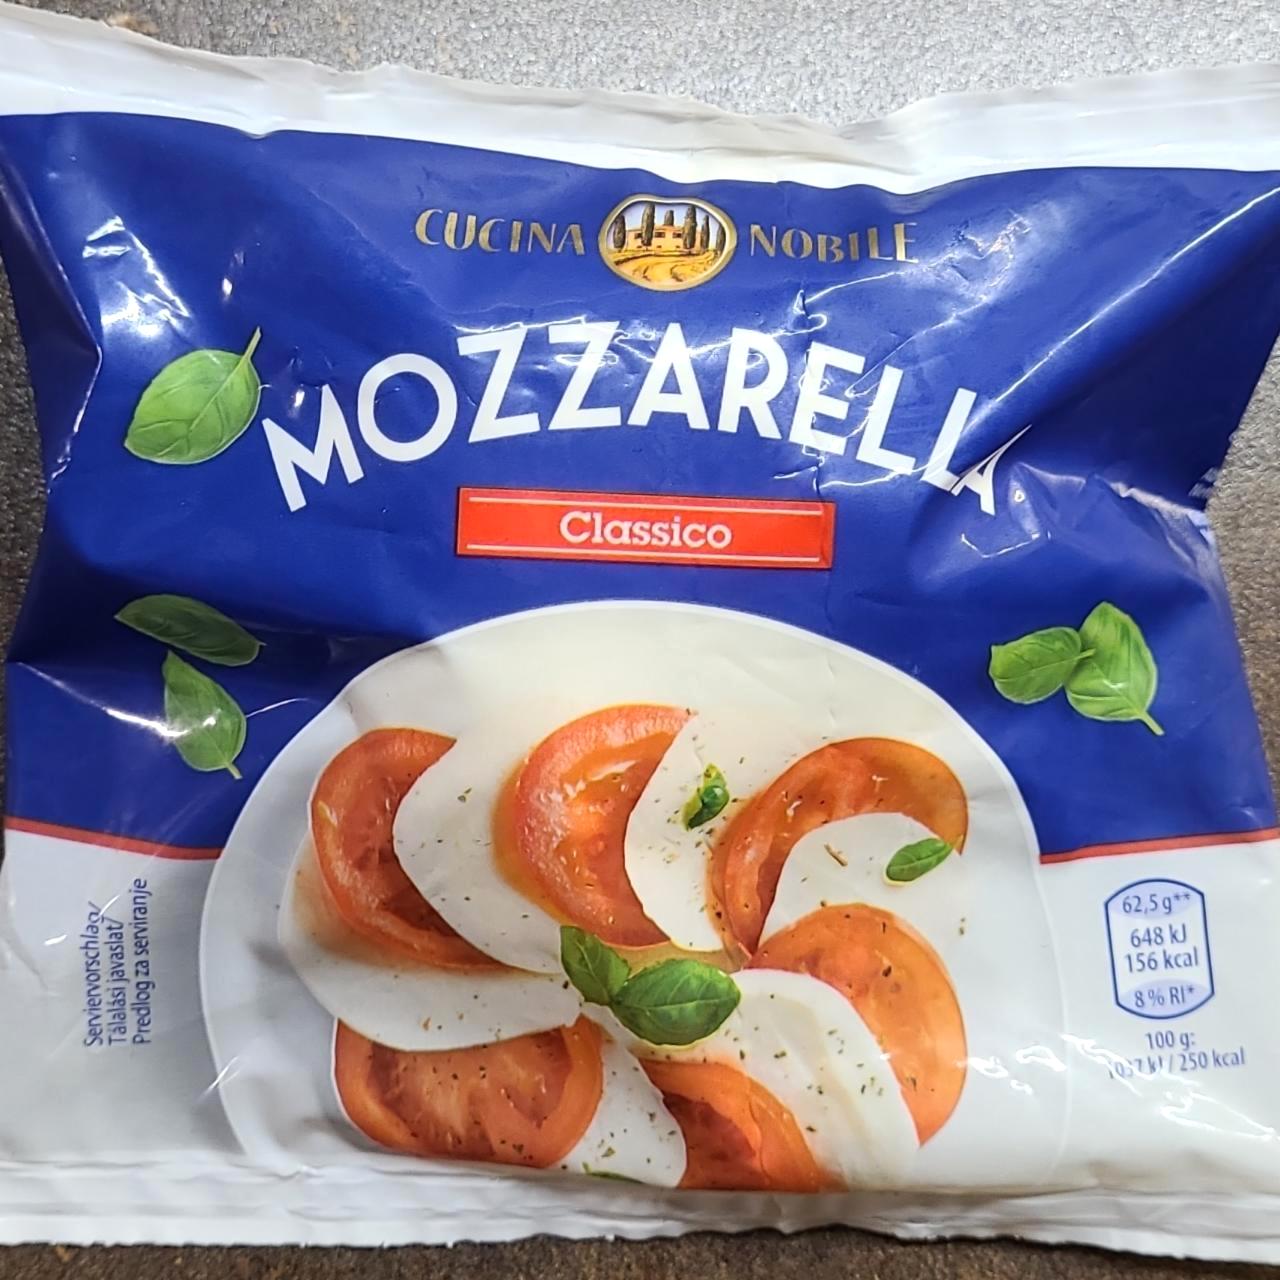 Képek - Mozzarella classico Cucina Nobile